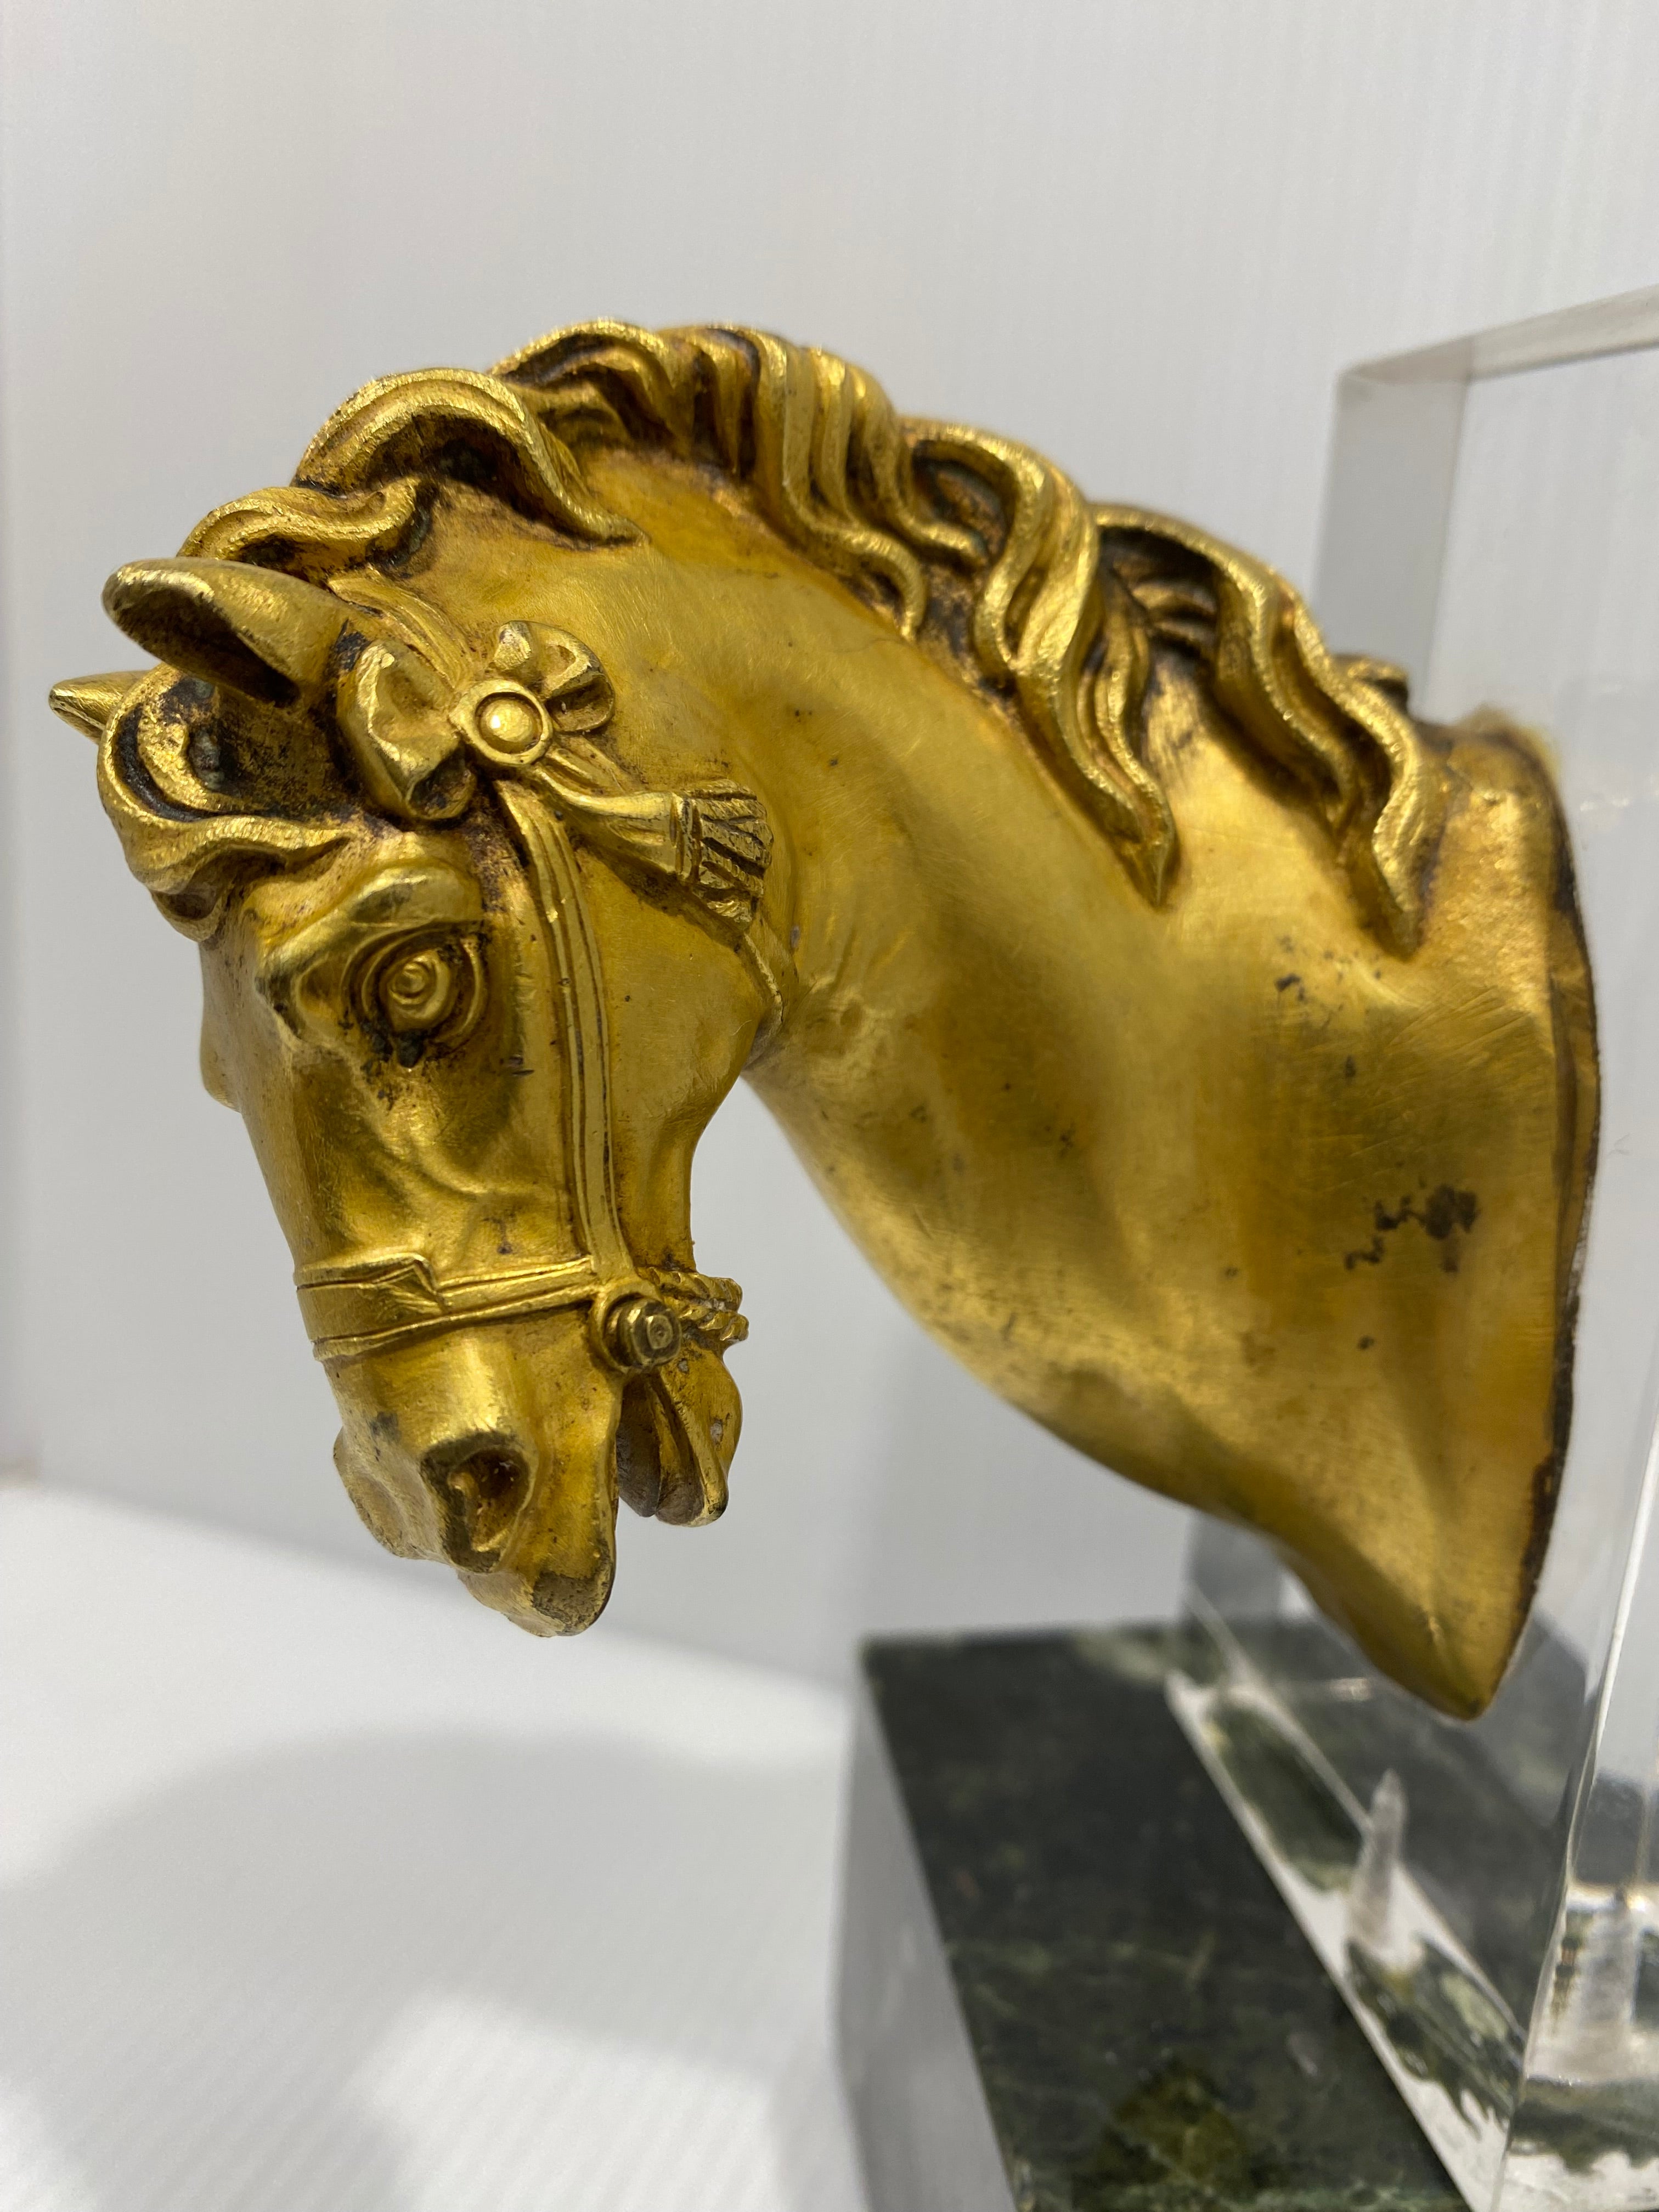 Antique gilt bronze Horse Head Sculpture, Decorative Part of an Italian Country House.